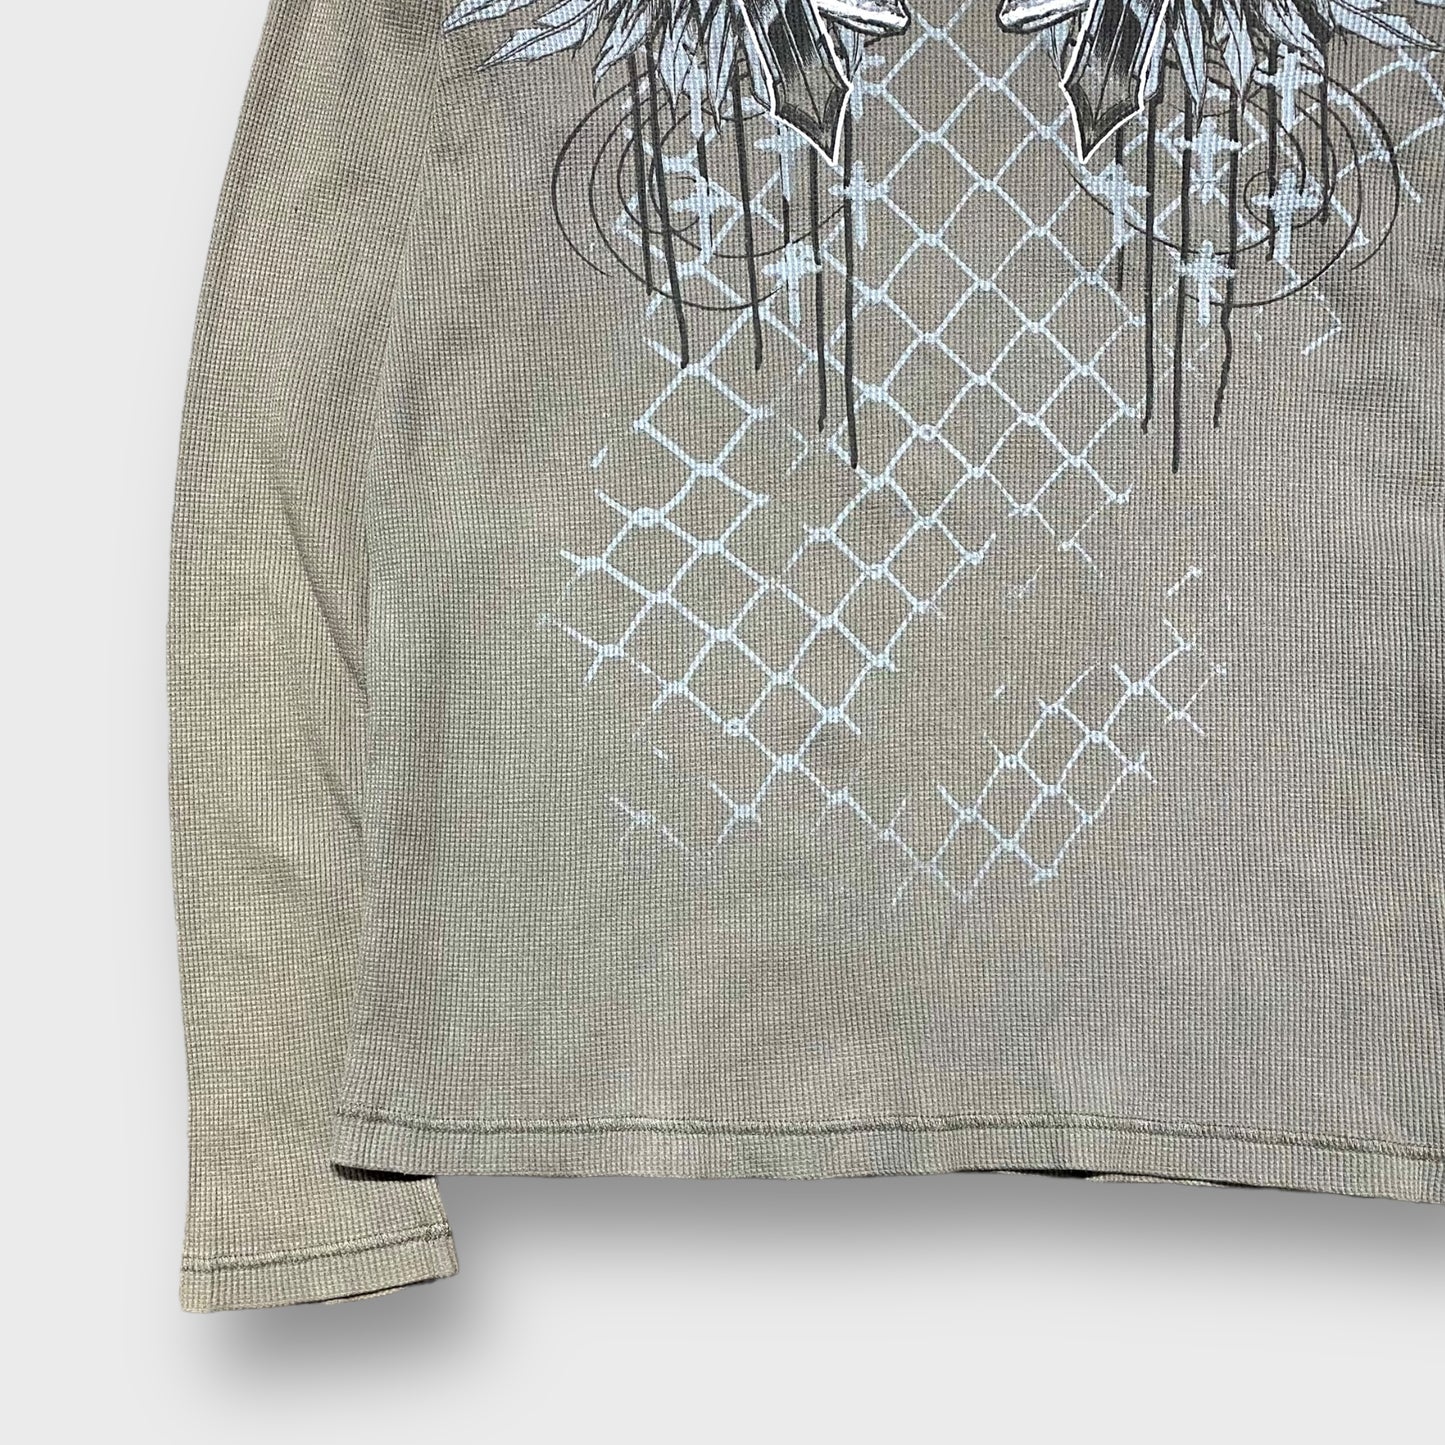 "MMA ELITE" Indian skull design thermal knit sweater